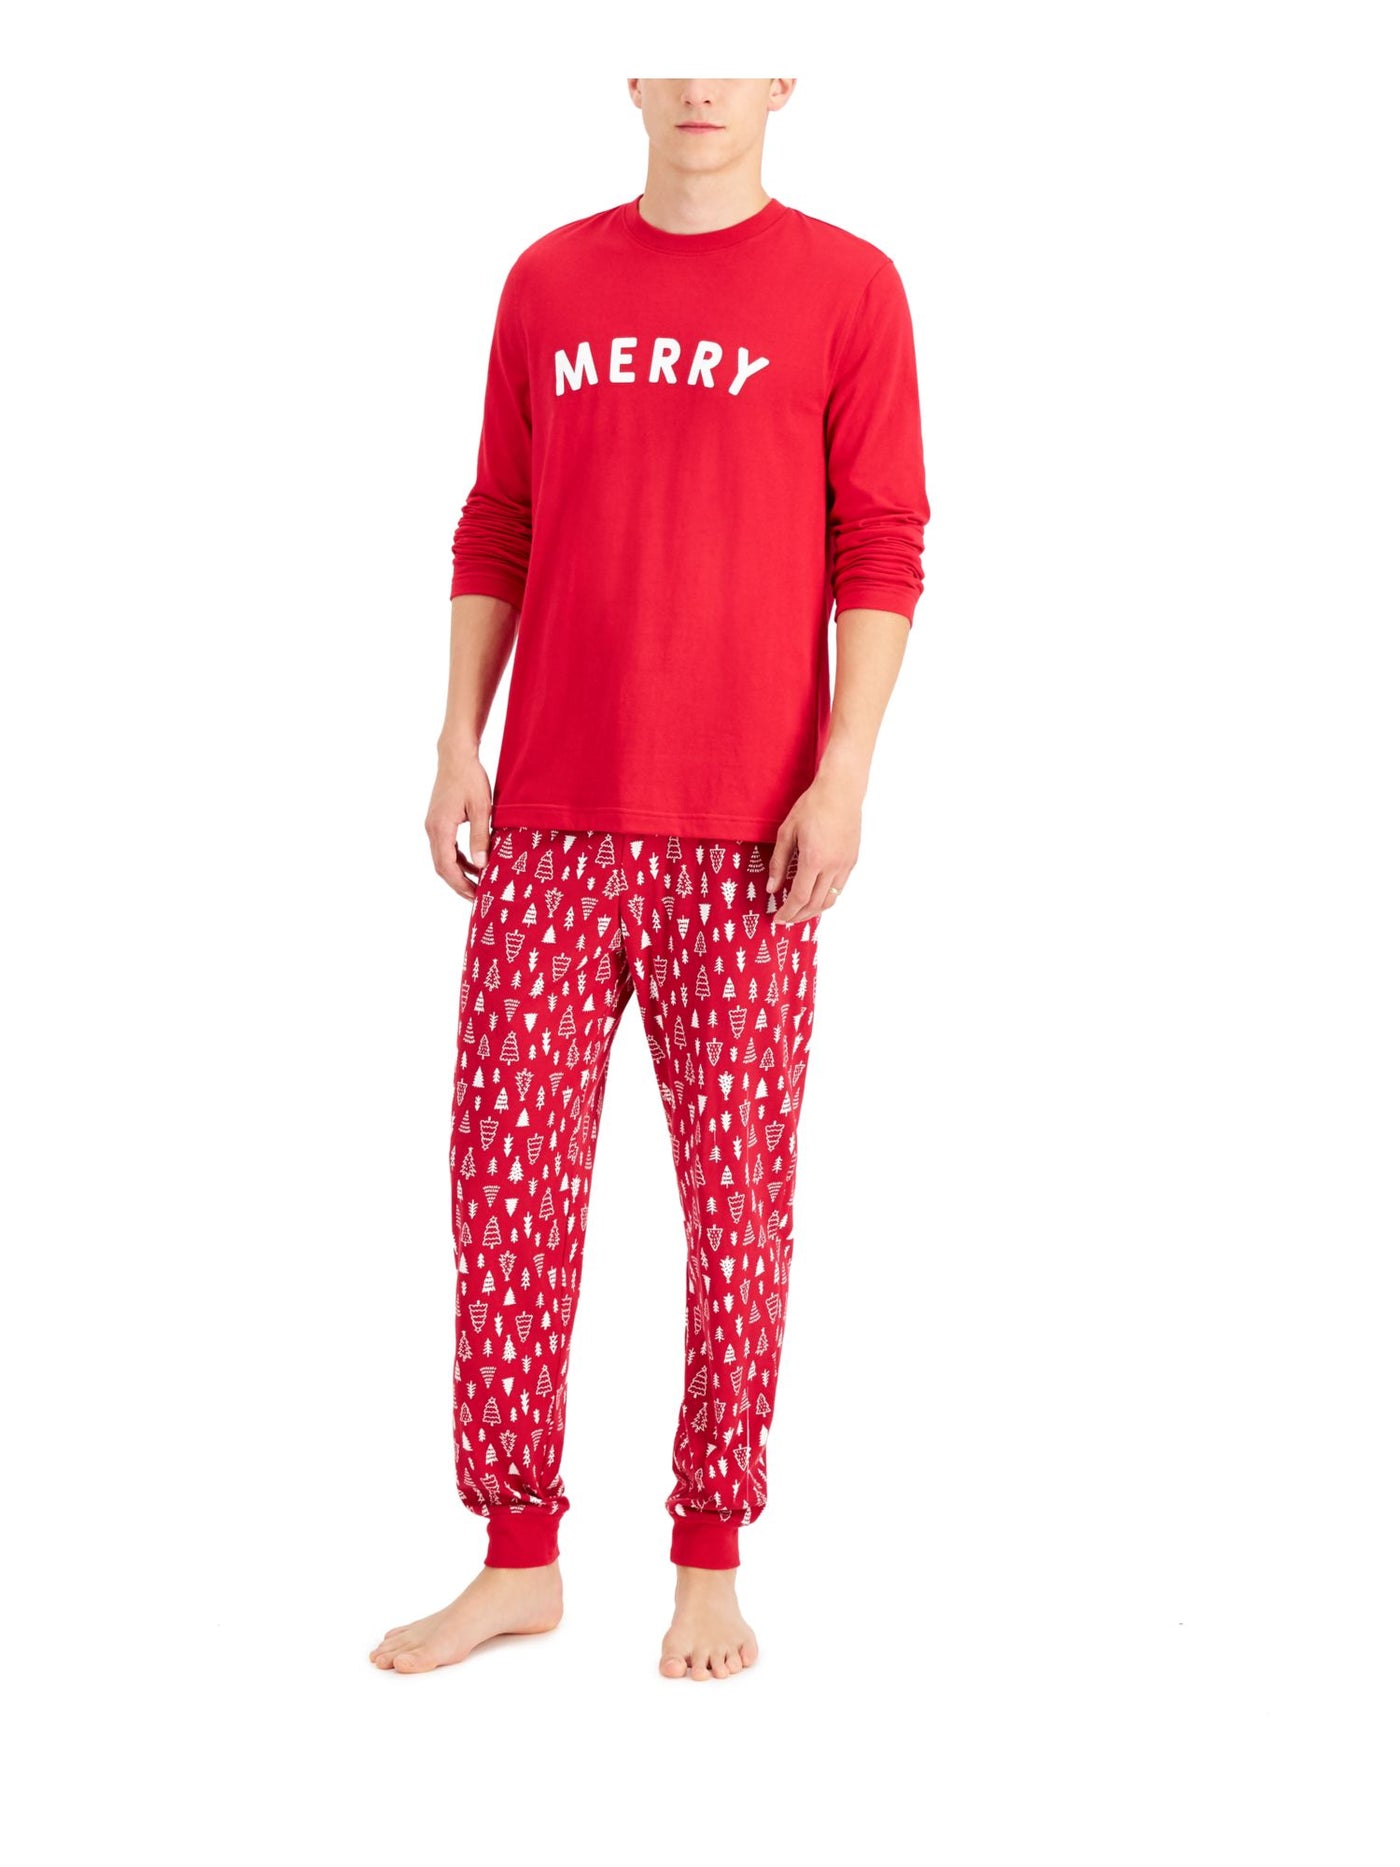 FAMILY PJs Mens Merry Red Graphic Elastic Band T-Shirt Top Cuffed Pants Pajamas Big & Tall 2XL Tall